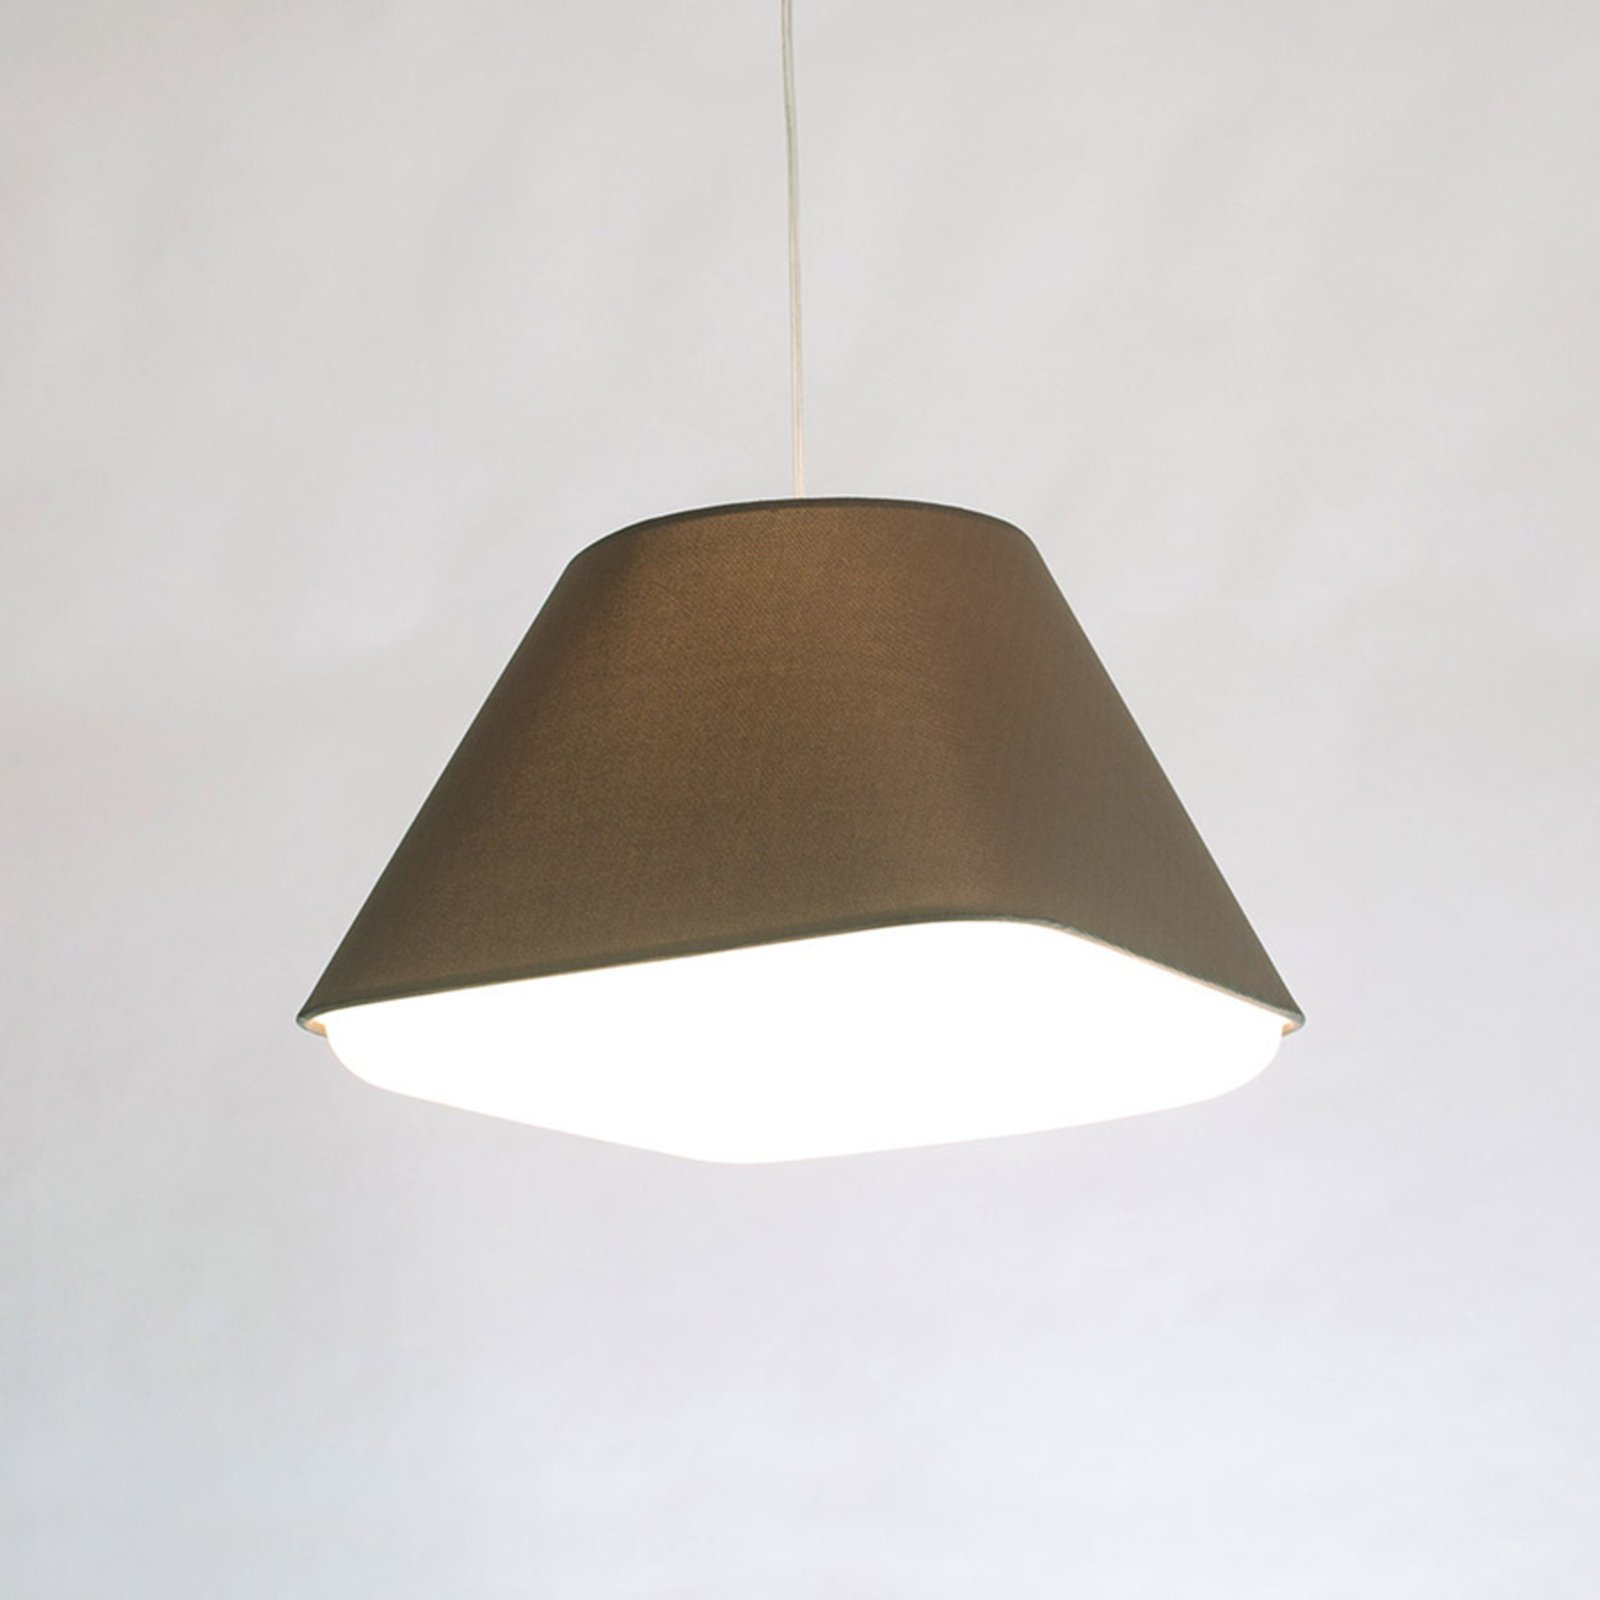 Innermost RD2SQ 40 - hanglamp in warm grijs